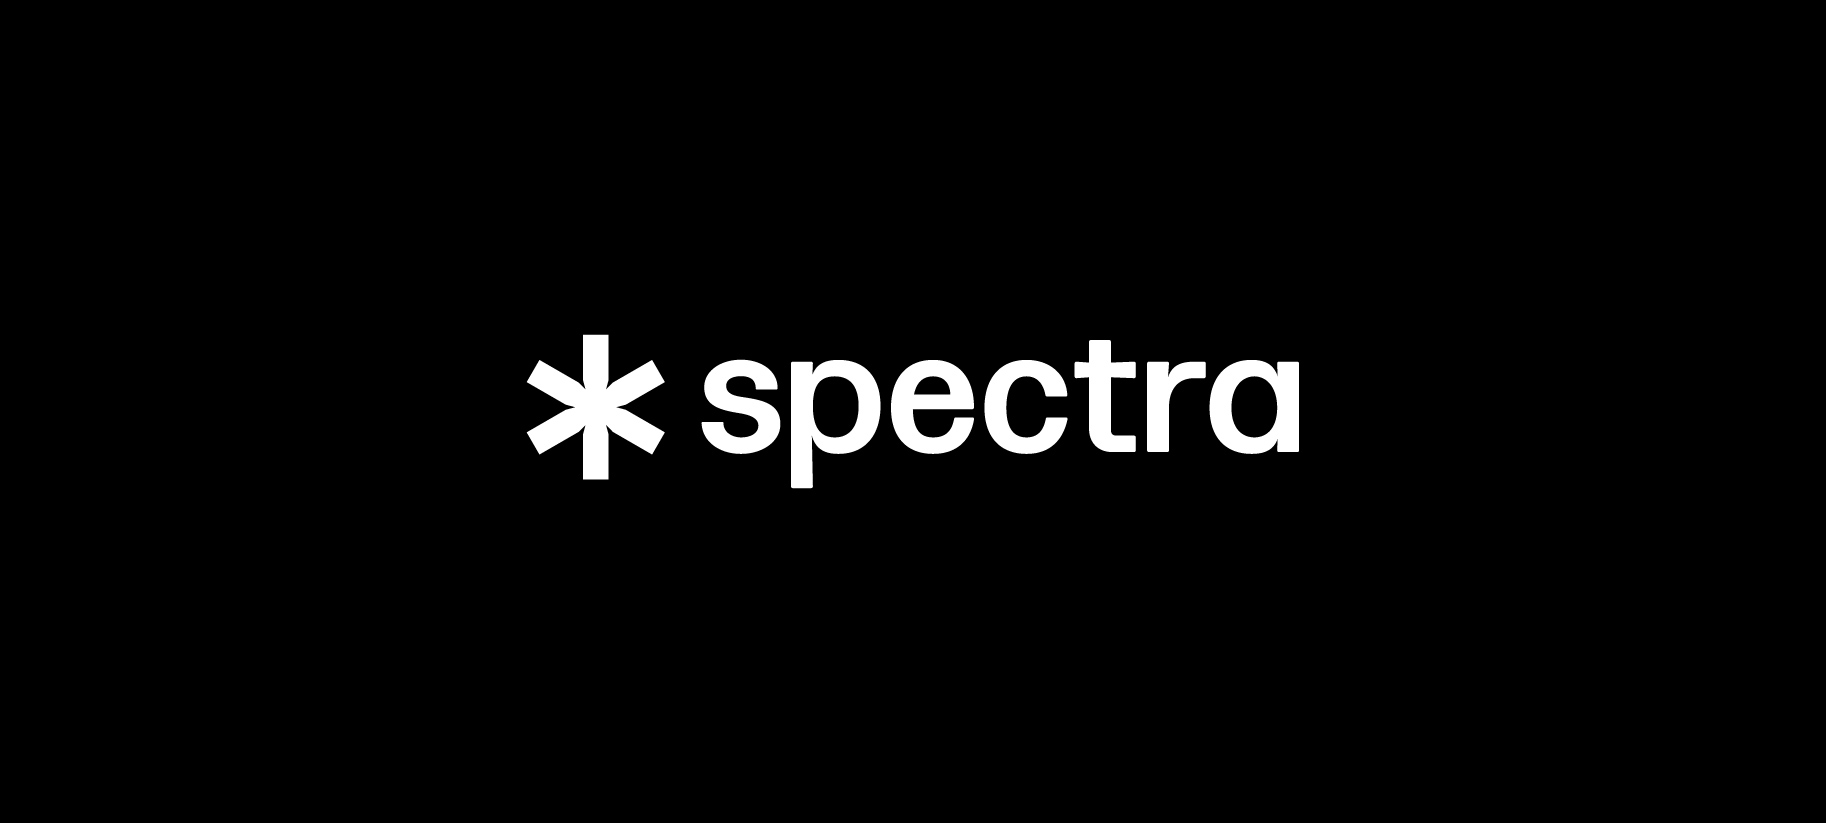 Spectra Main